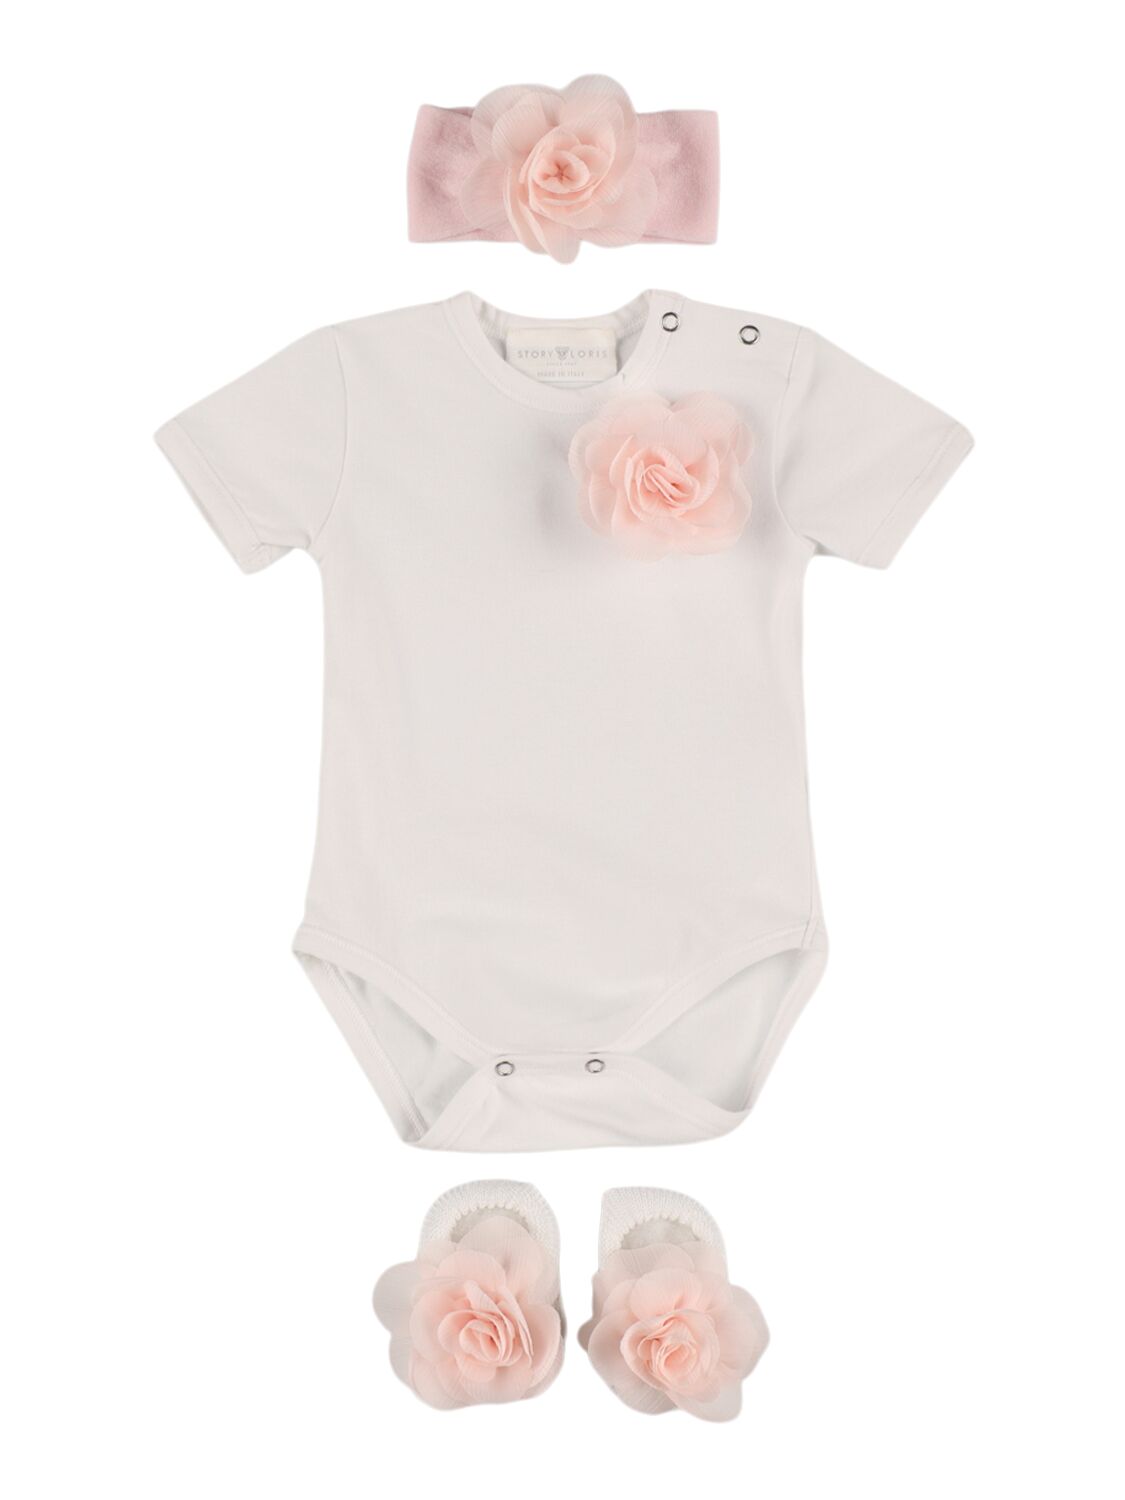 Story Loris Babies' Jersey Bodysuit, Booties & Headband In Pink